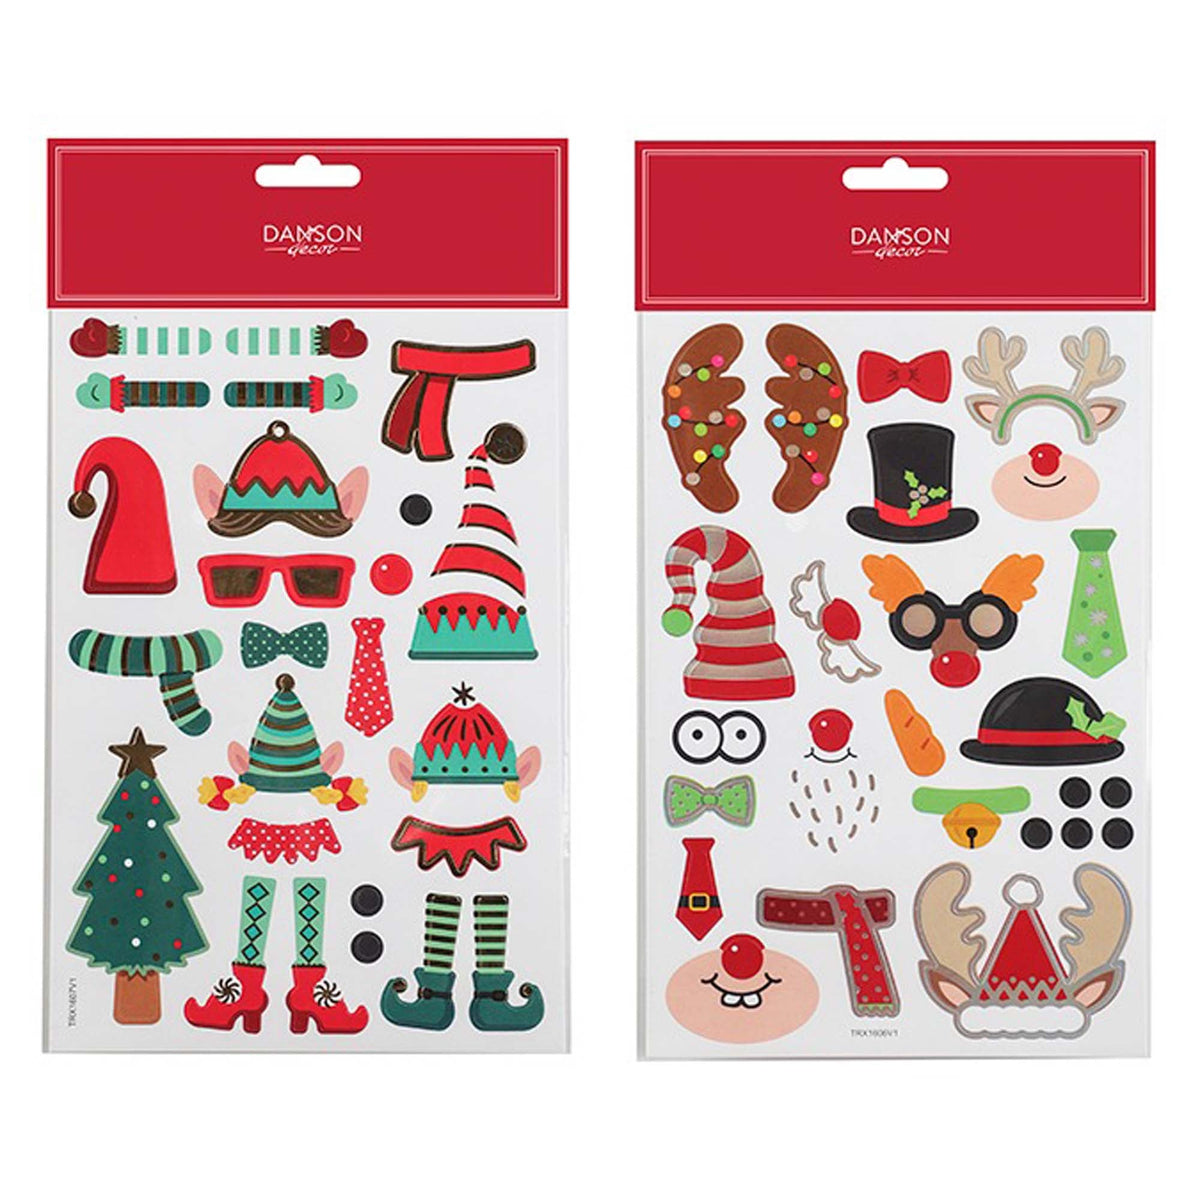 DANSON DECOR Christmas Christmas Sticker Sheet with Foil Trim, Assortment, 1 Count 062615822286